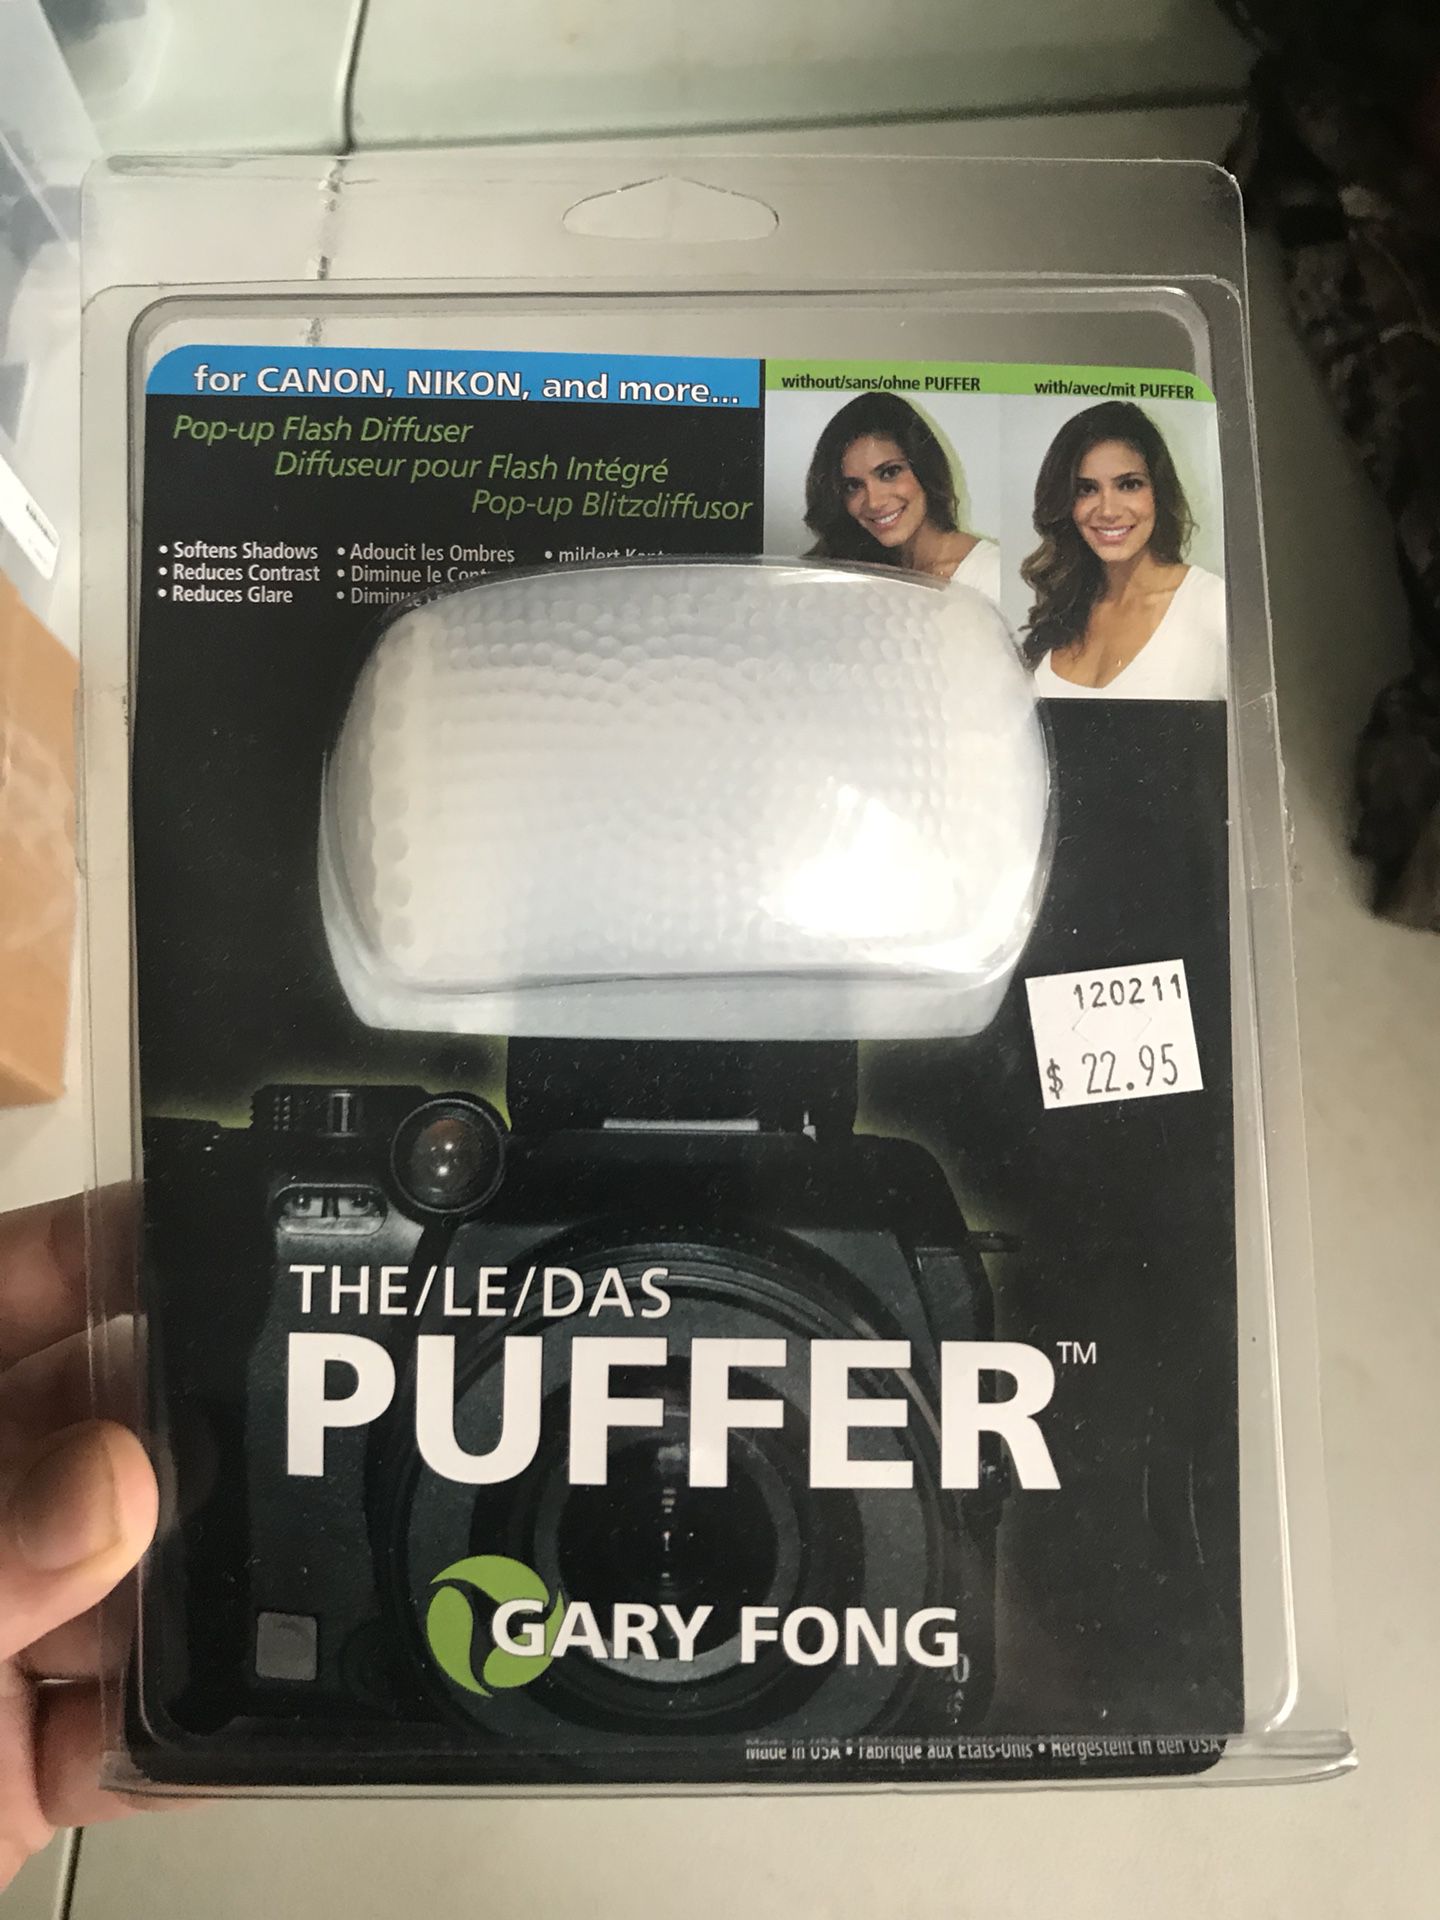 Gary Fong Puffer Pop-Up Flash Diffuser for Canon, Nikon Cameras